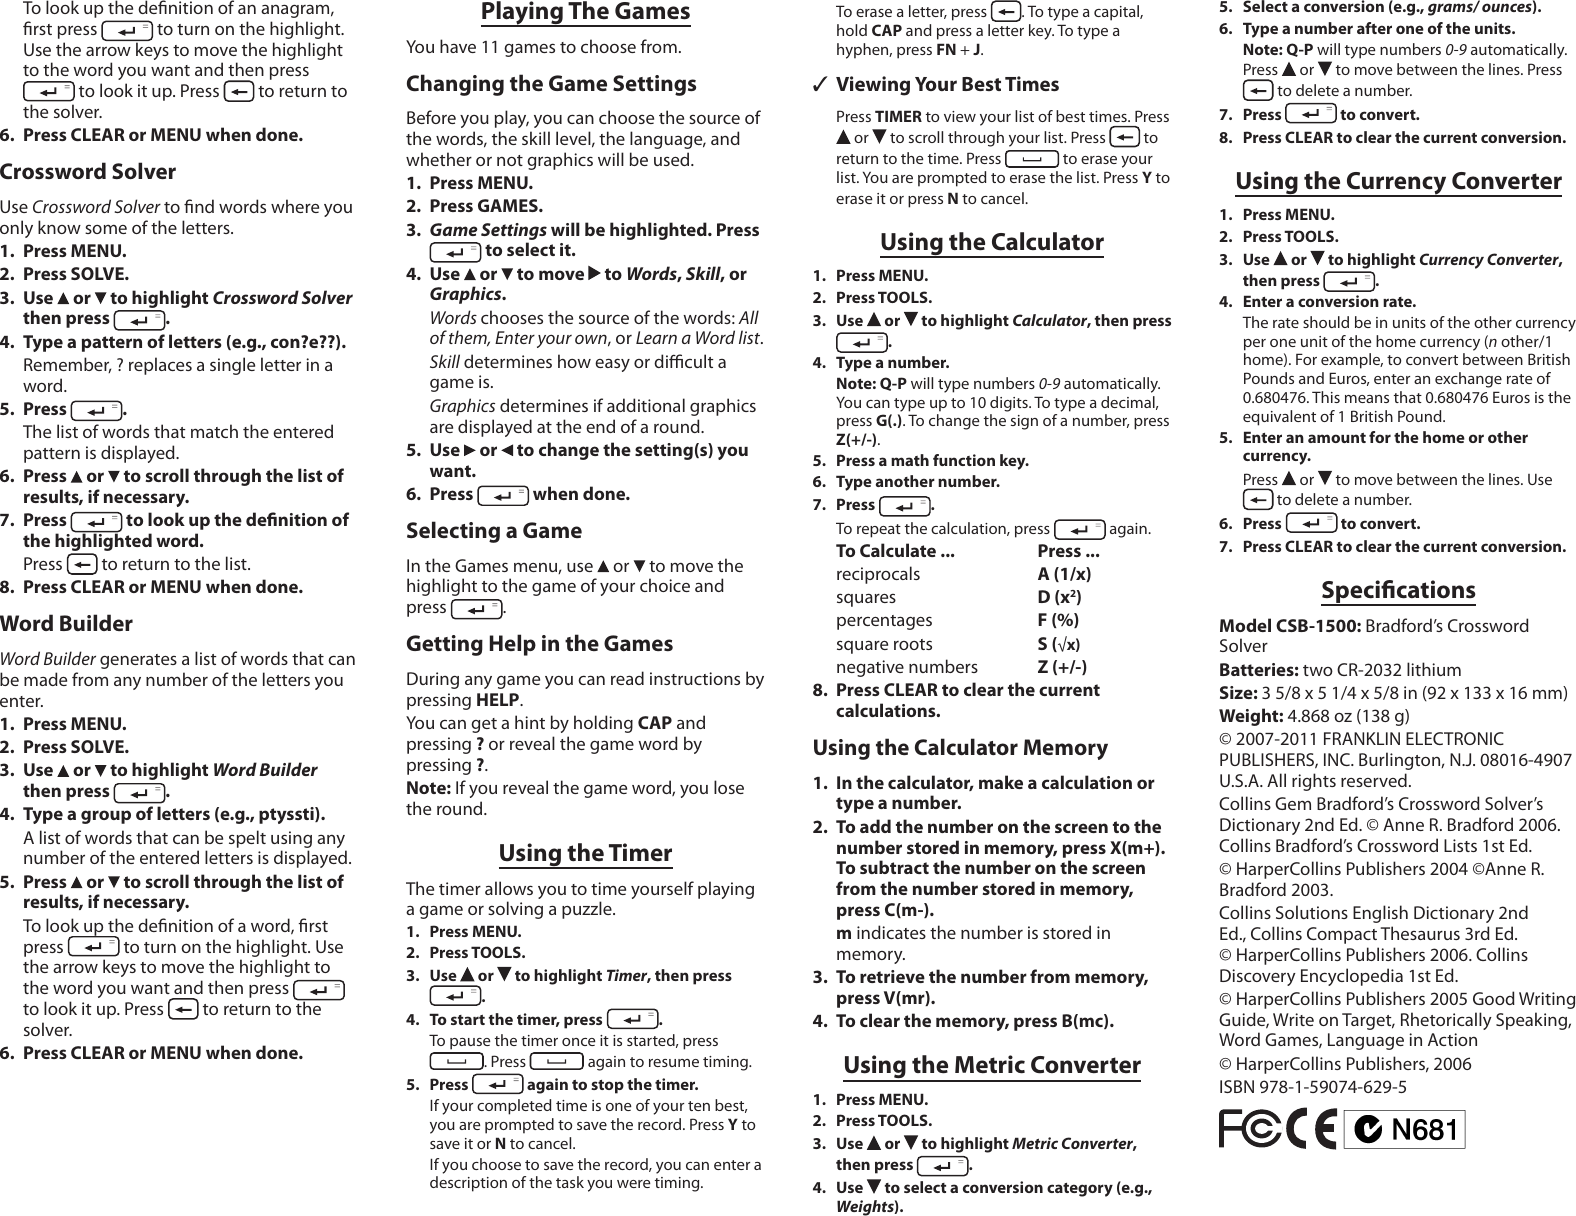 Page 5 of 6 - Franklin Franklin-Franklin-Table-Top-Game-Bradfords-Crossword-Solver-Users-Manual-  Franklin-franklin-table-top-game-bradfords-crossword-solver-users-manual